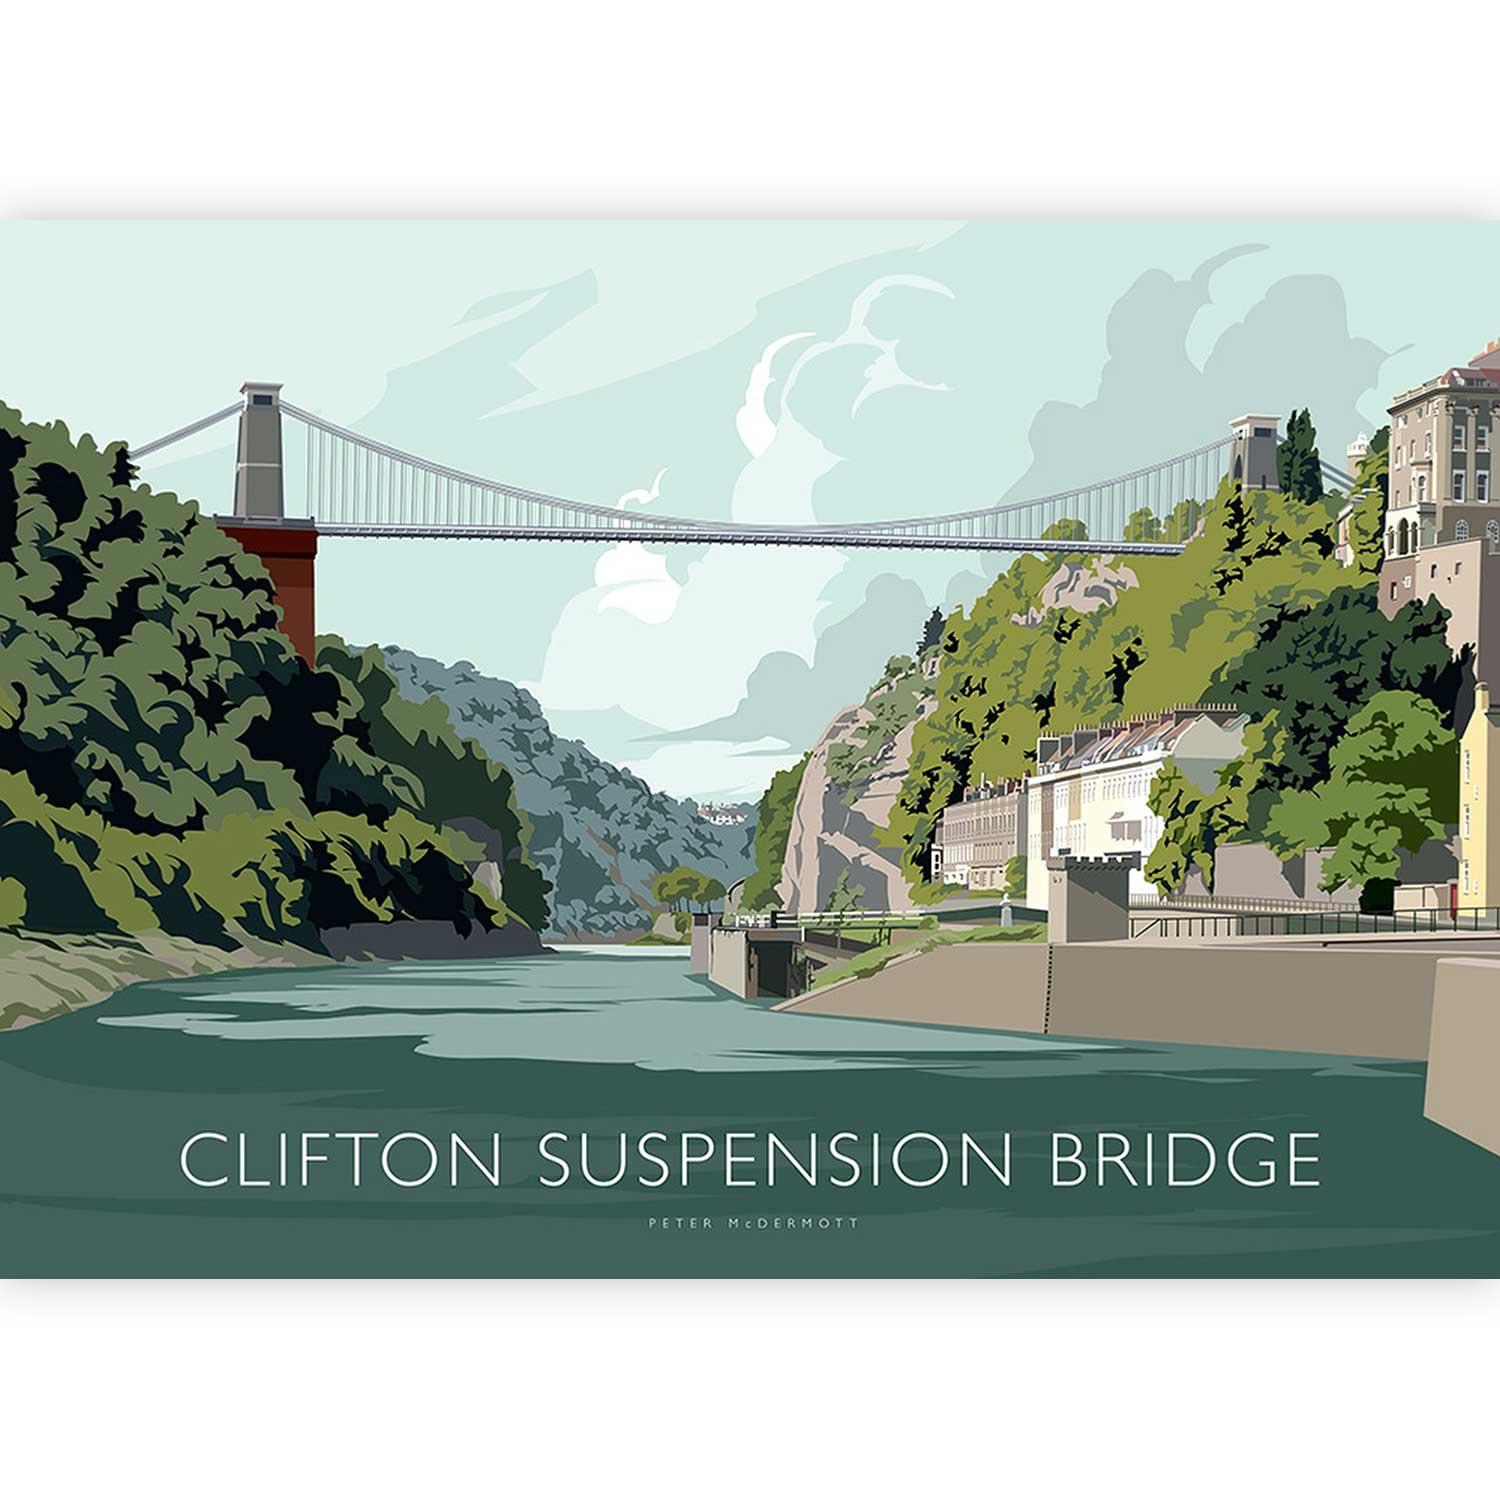 Clifton Suspension Bridge (Green) by Peter McDermott